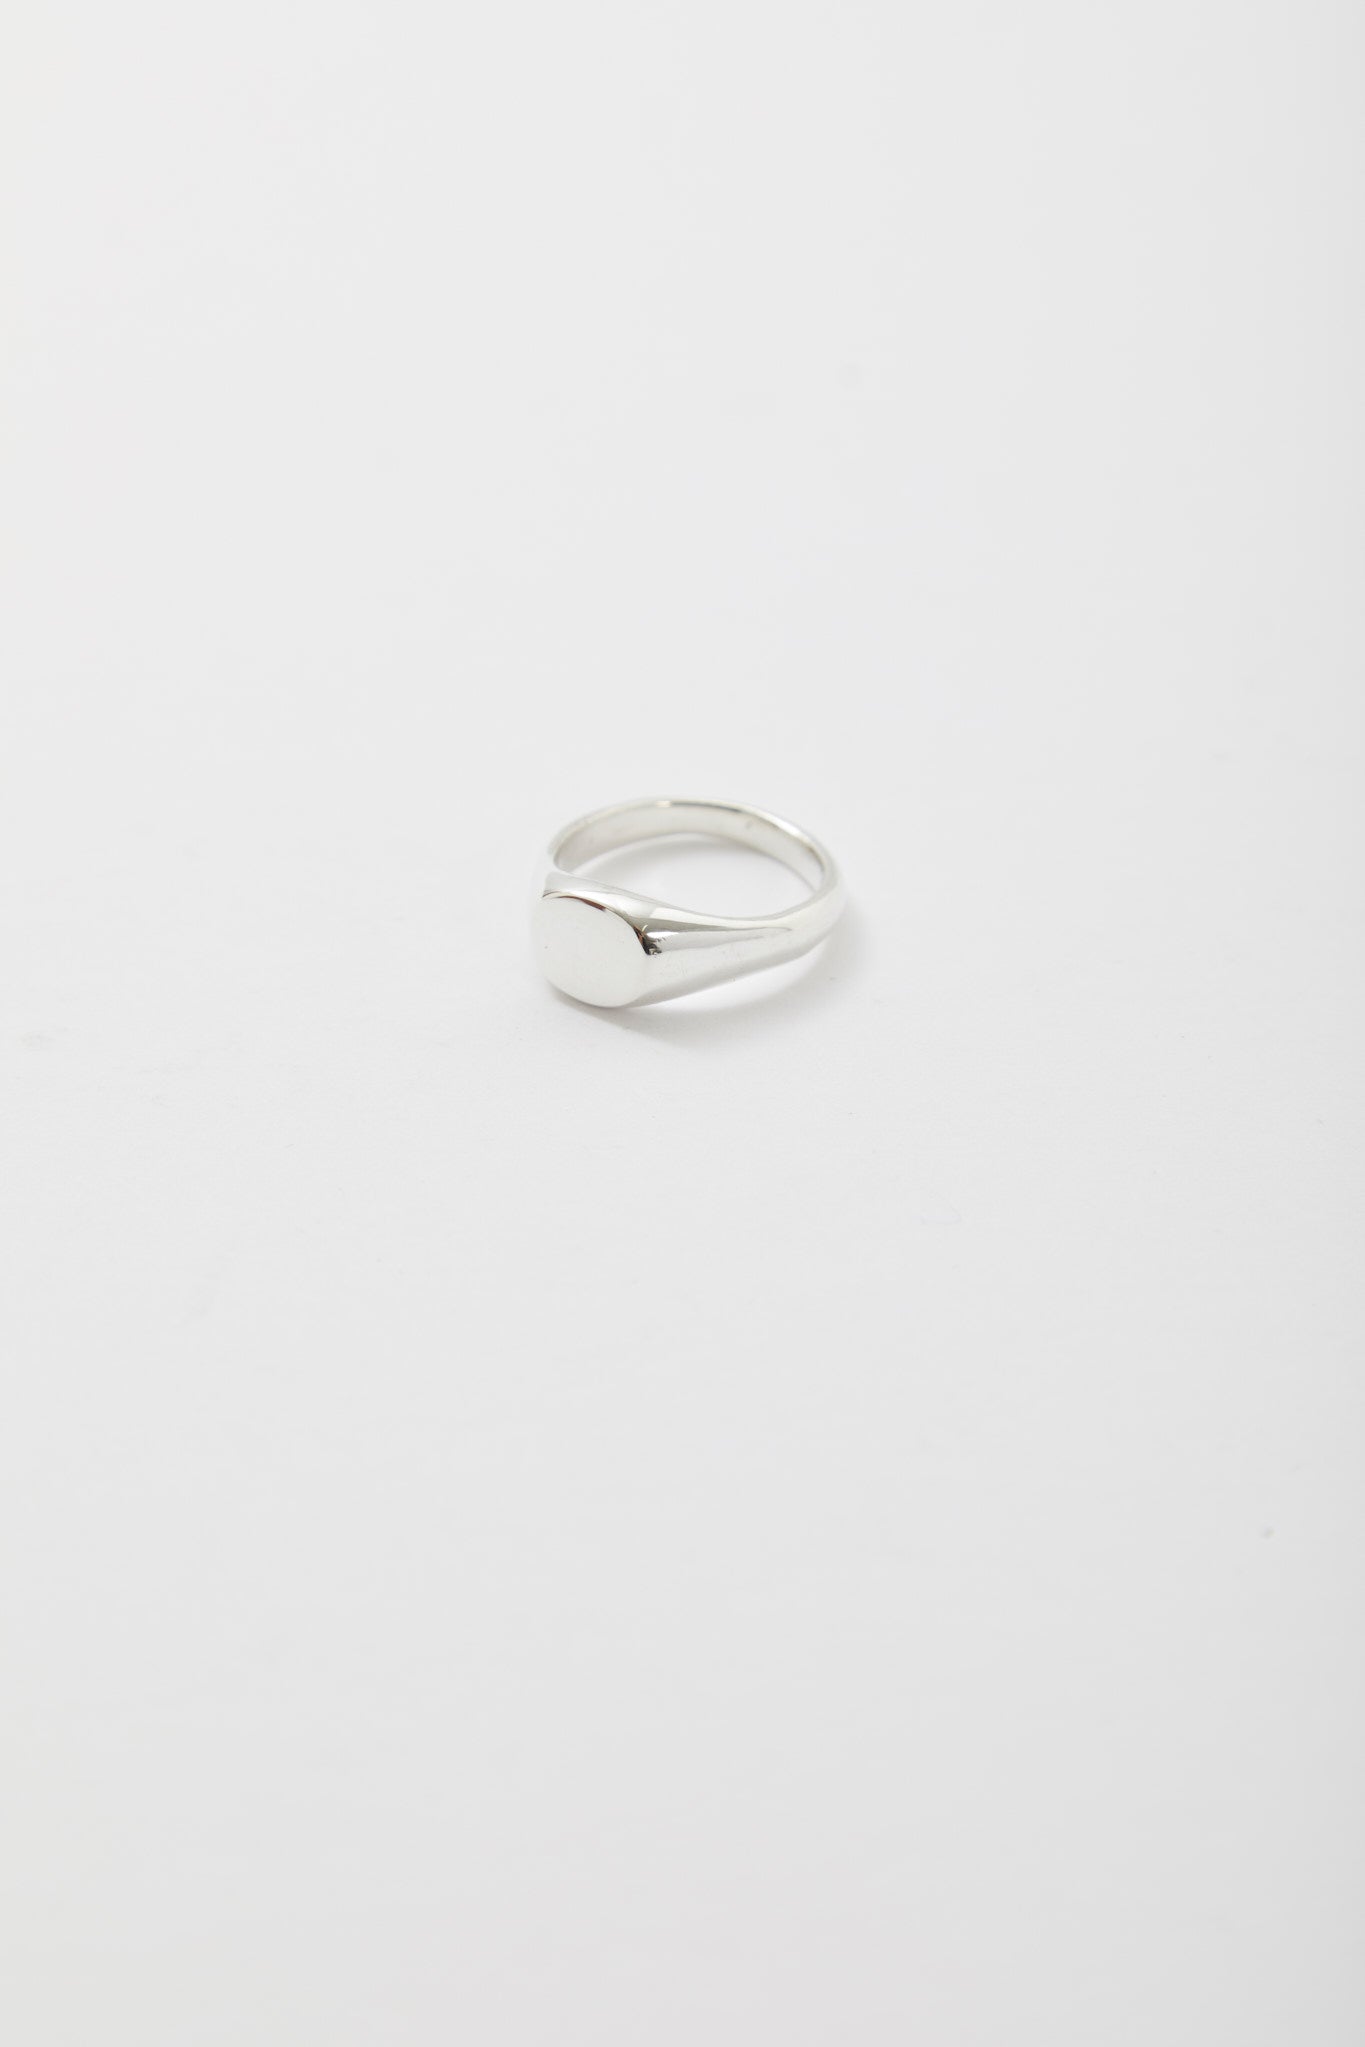 Type 001 Classic Signet Ring